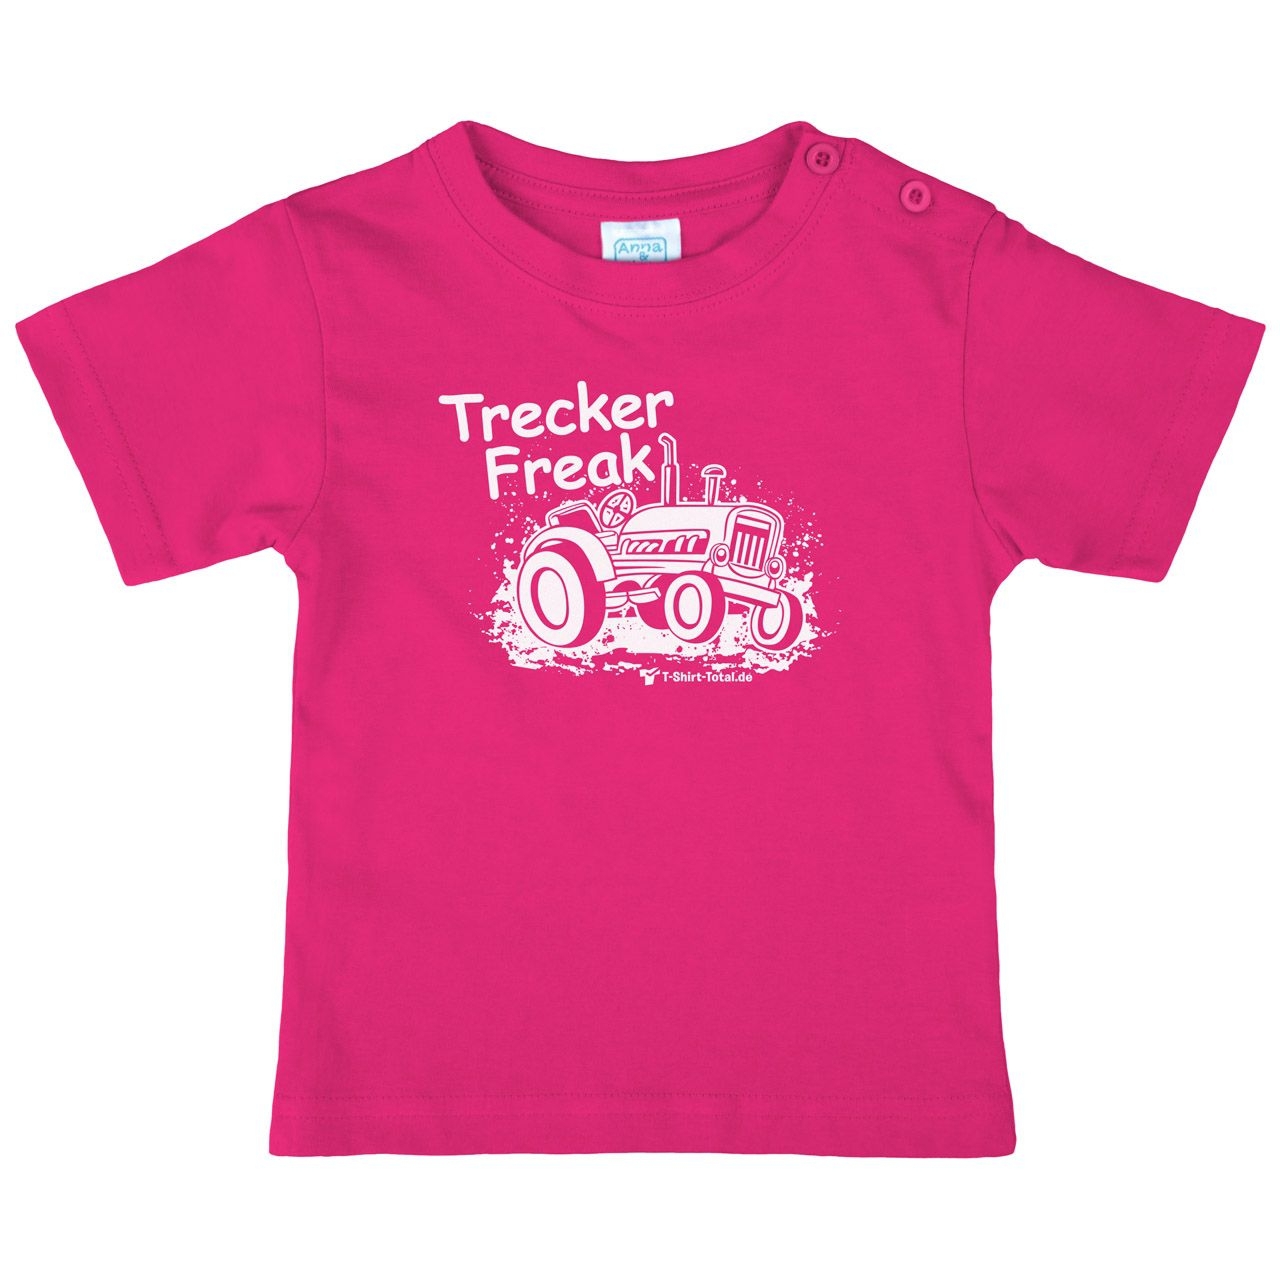 Trecker Freak Kinder T-Shirt pink 92